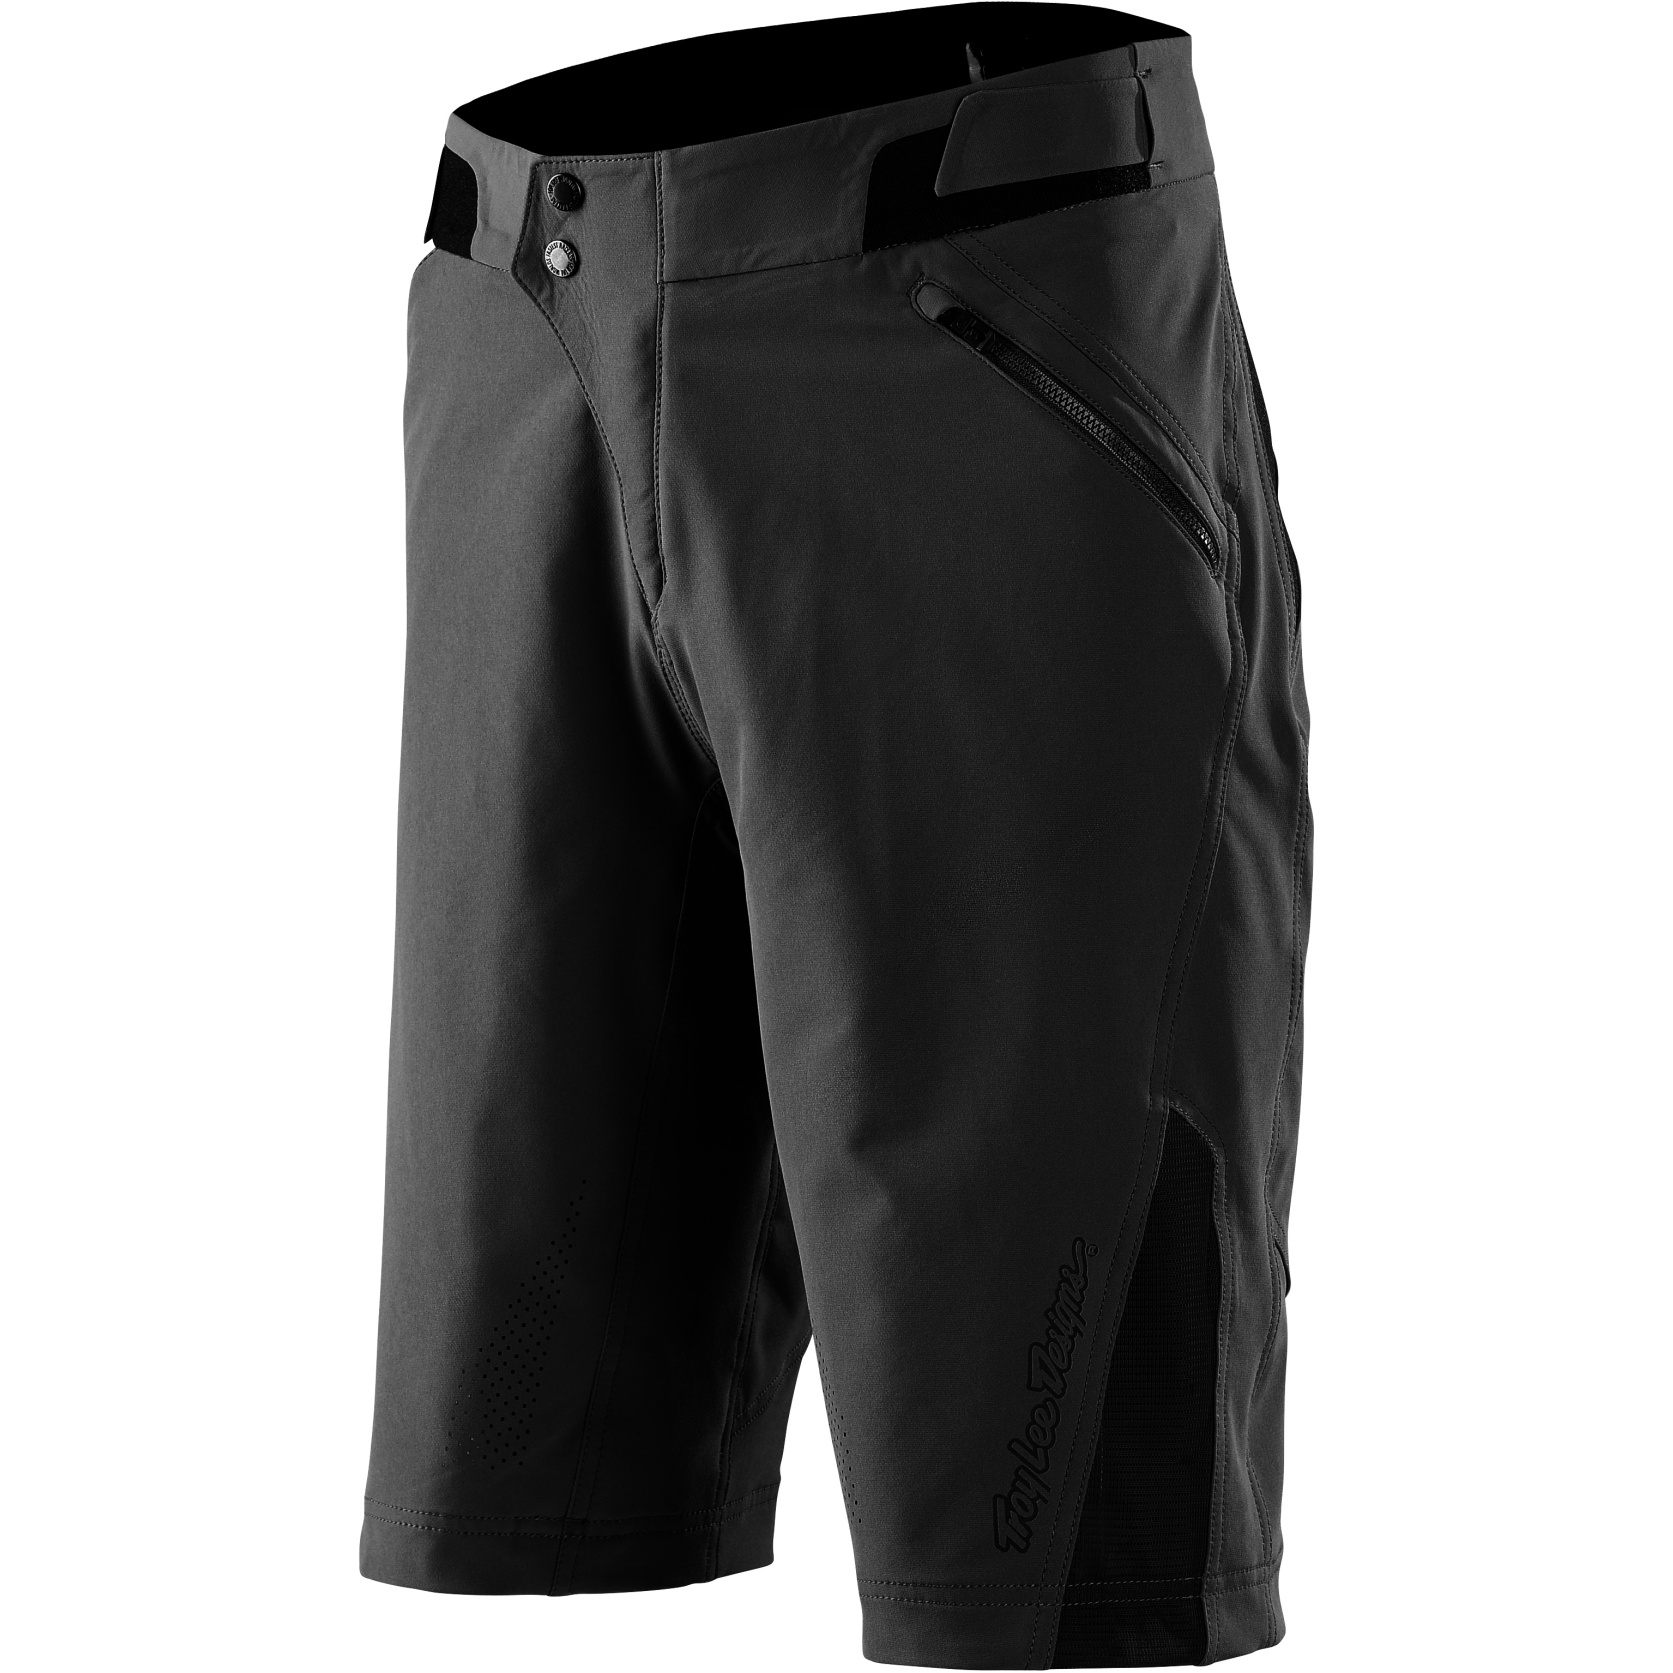 Image of Troy Lee Designs Ruckus Shell Shorts - Black